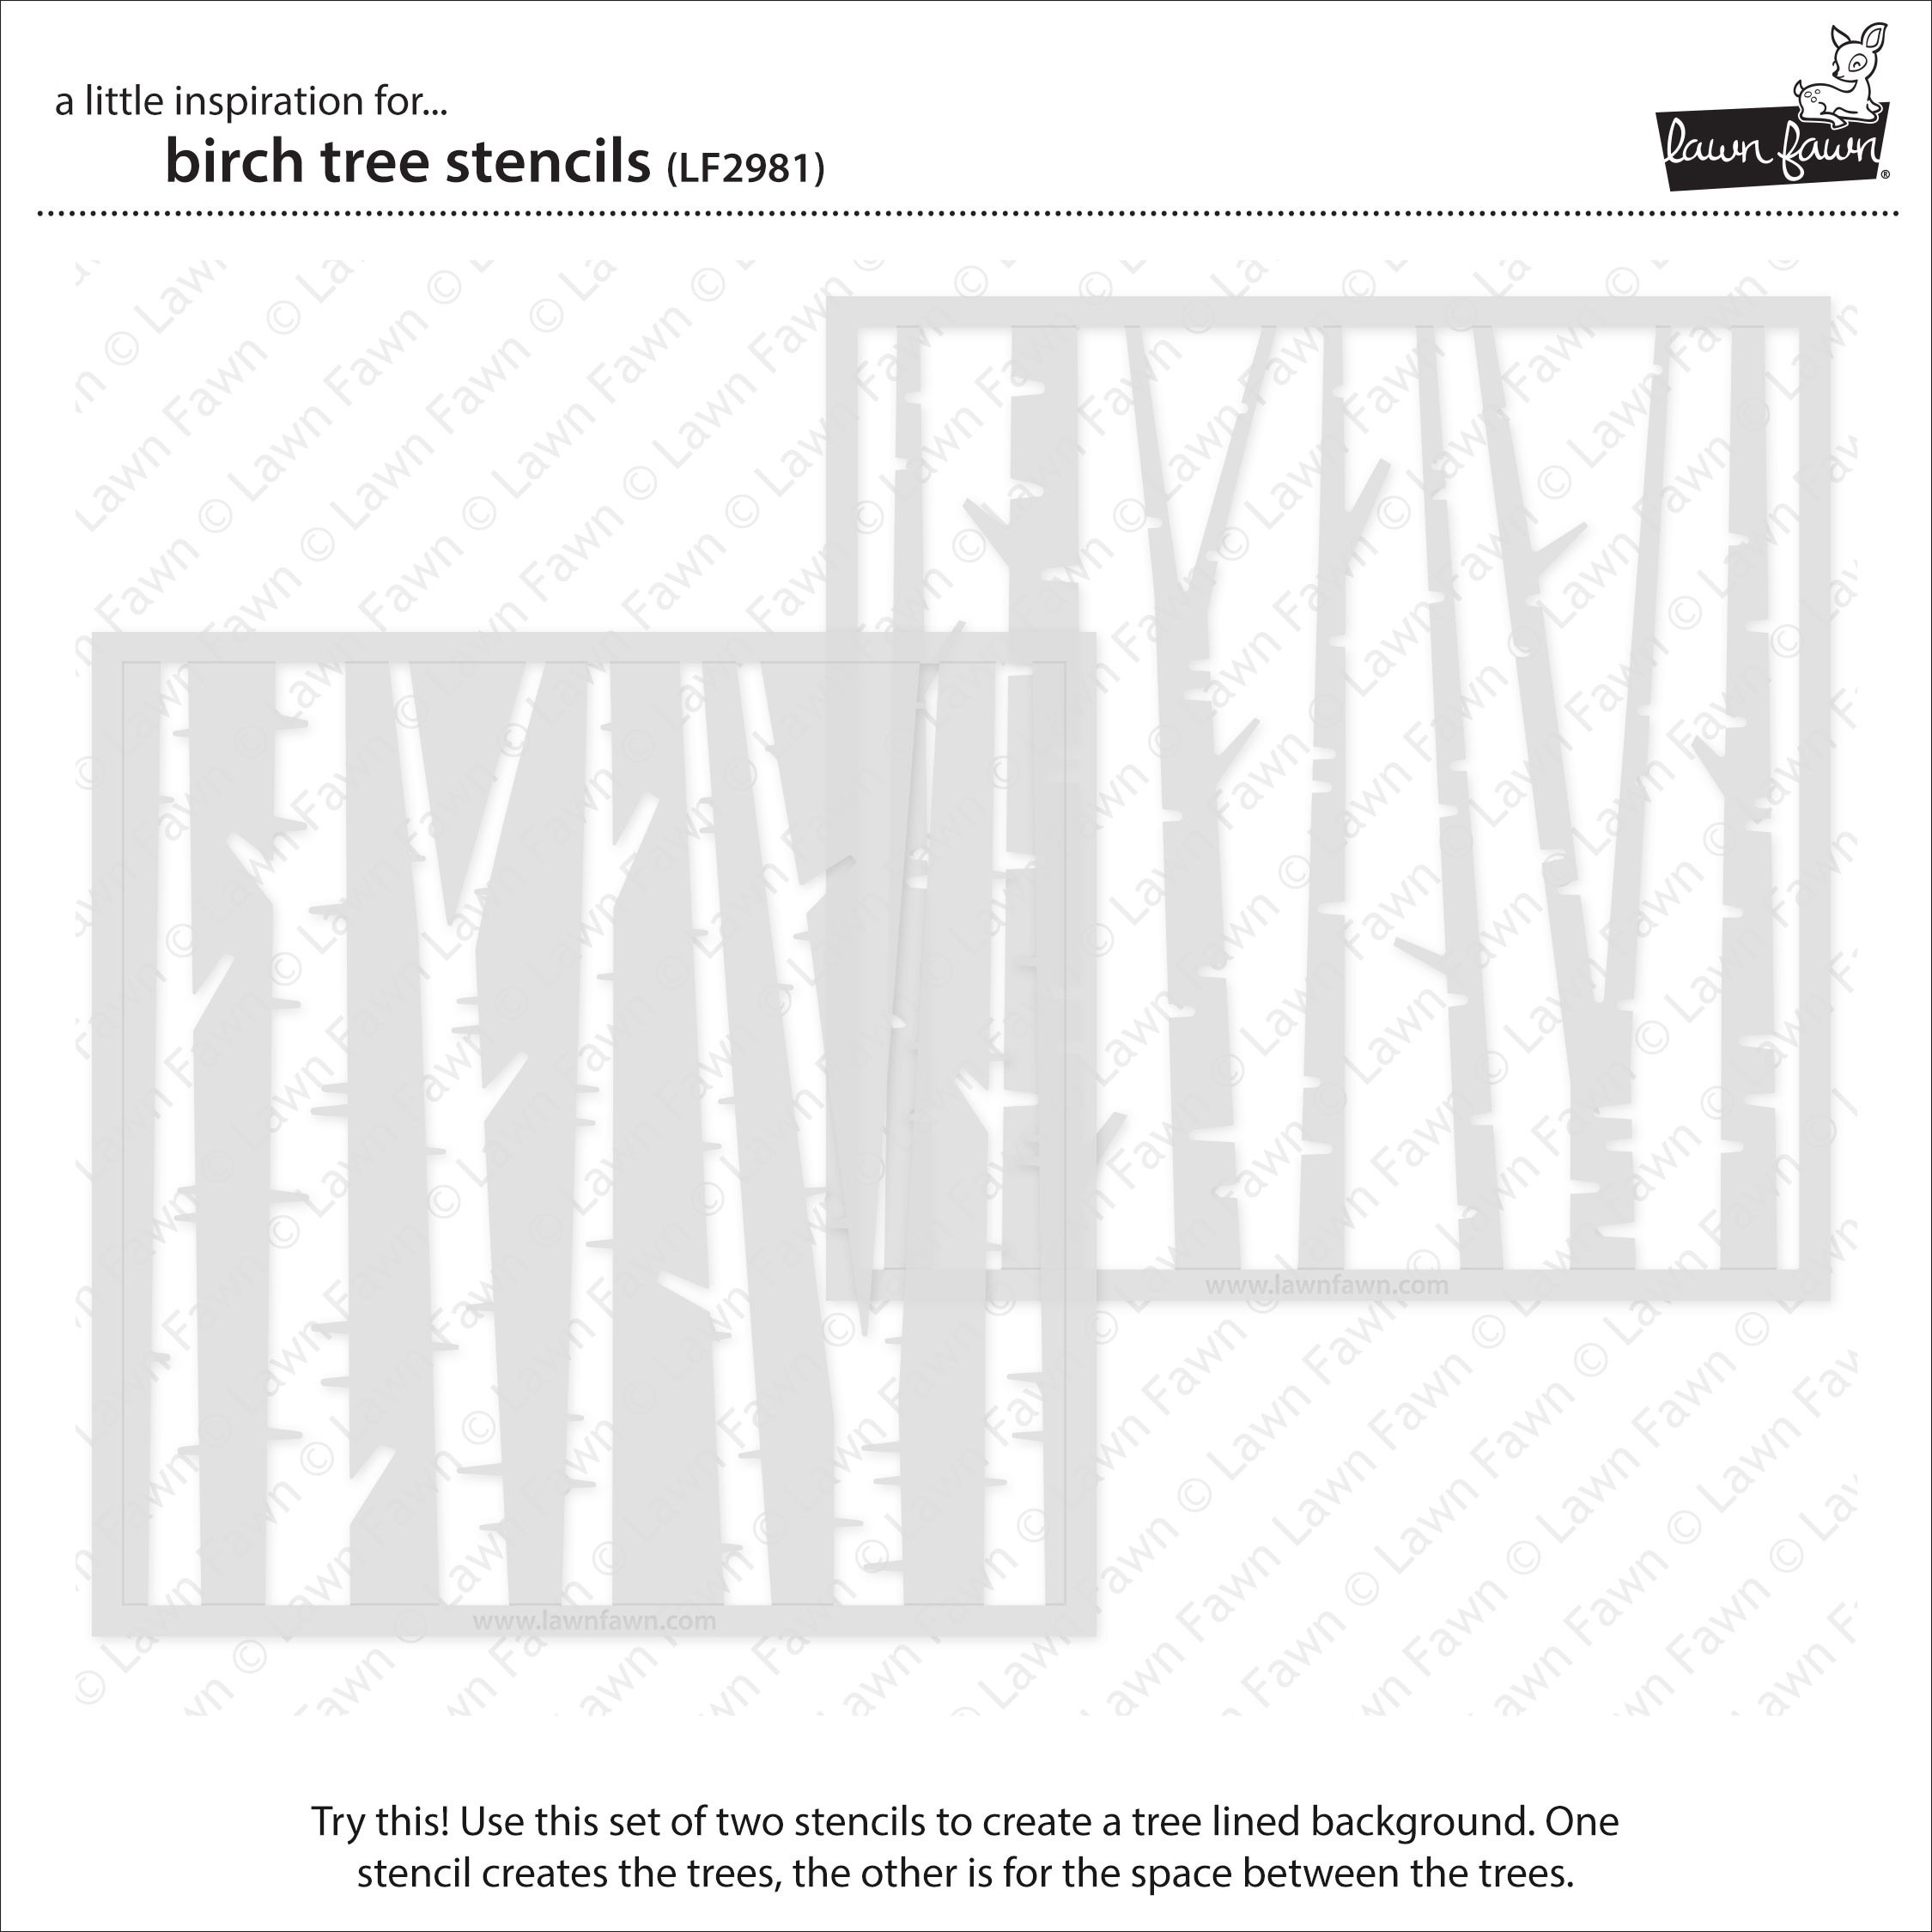 Lawn Fawn birch tree stencils LF2981